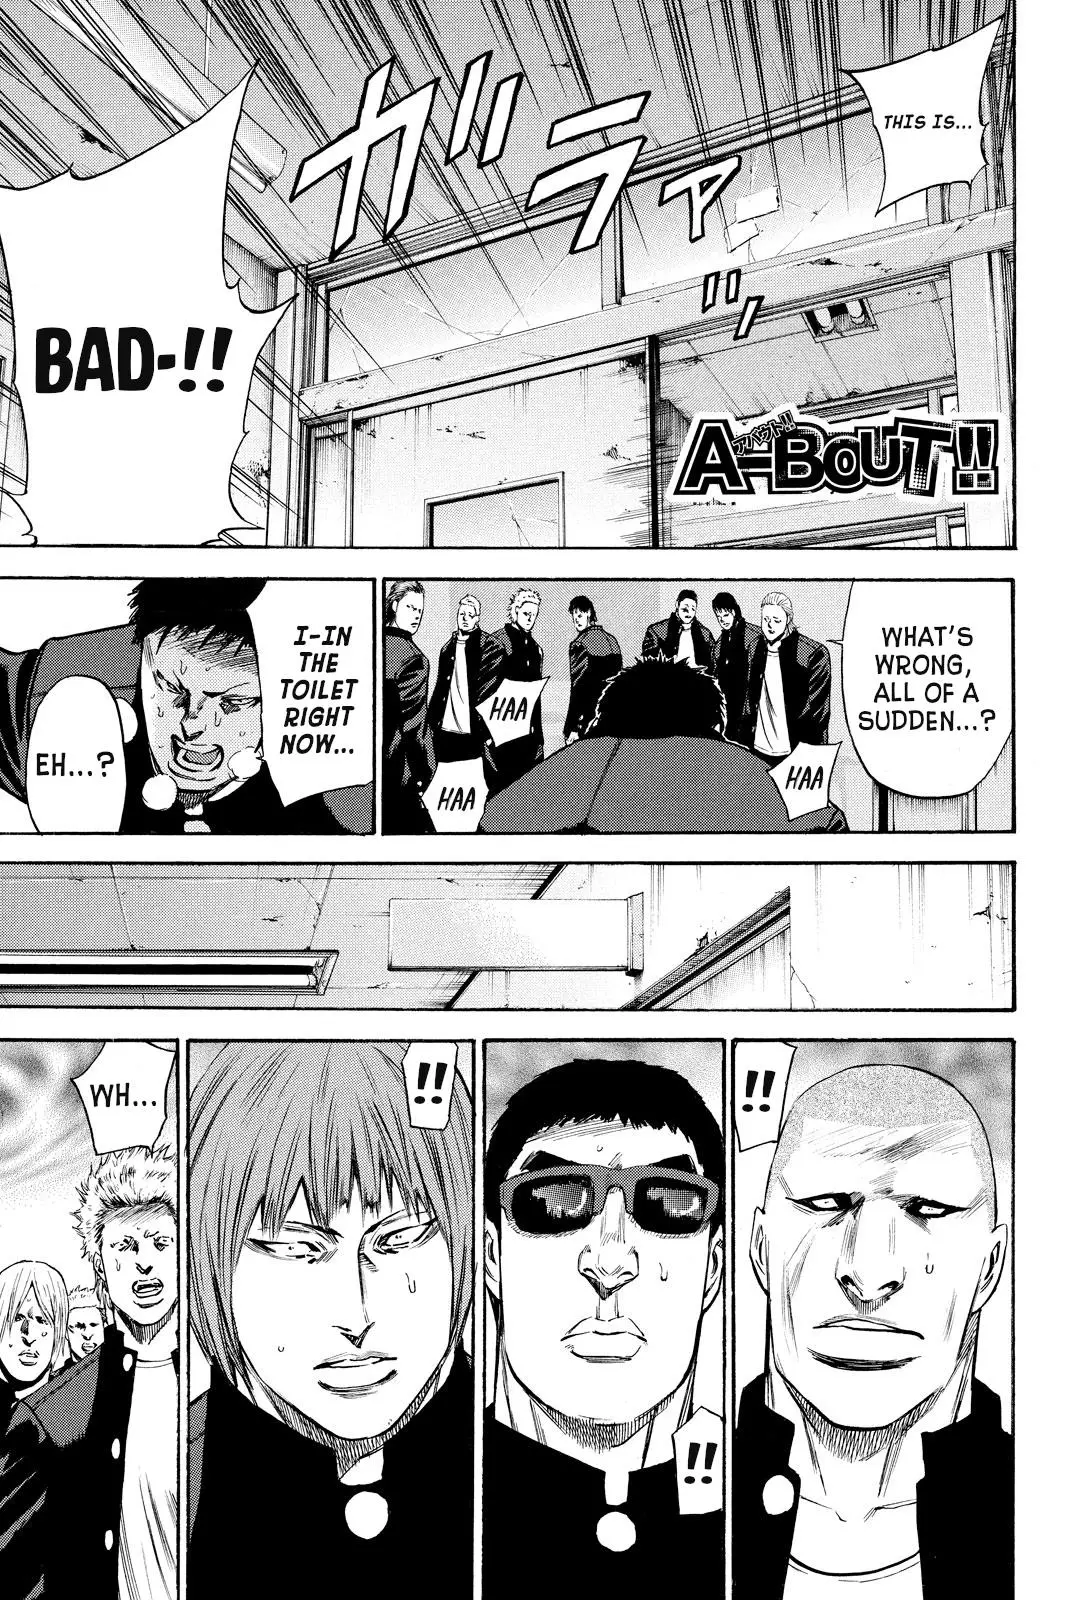 A-Bout!! - Asagiri Daikatsuyaku Hen - 3 page 1-5dd76045